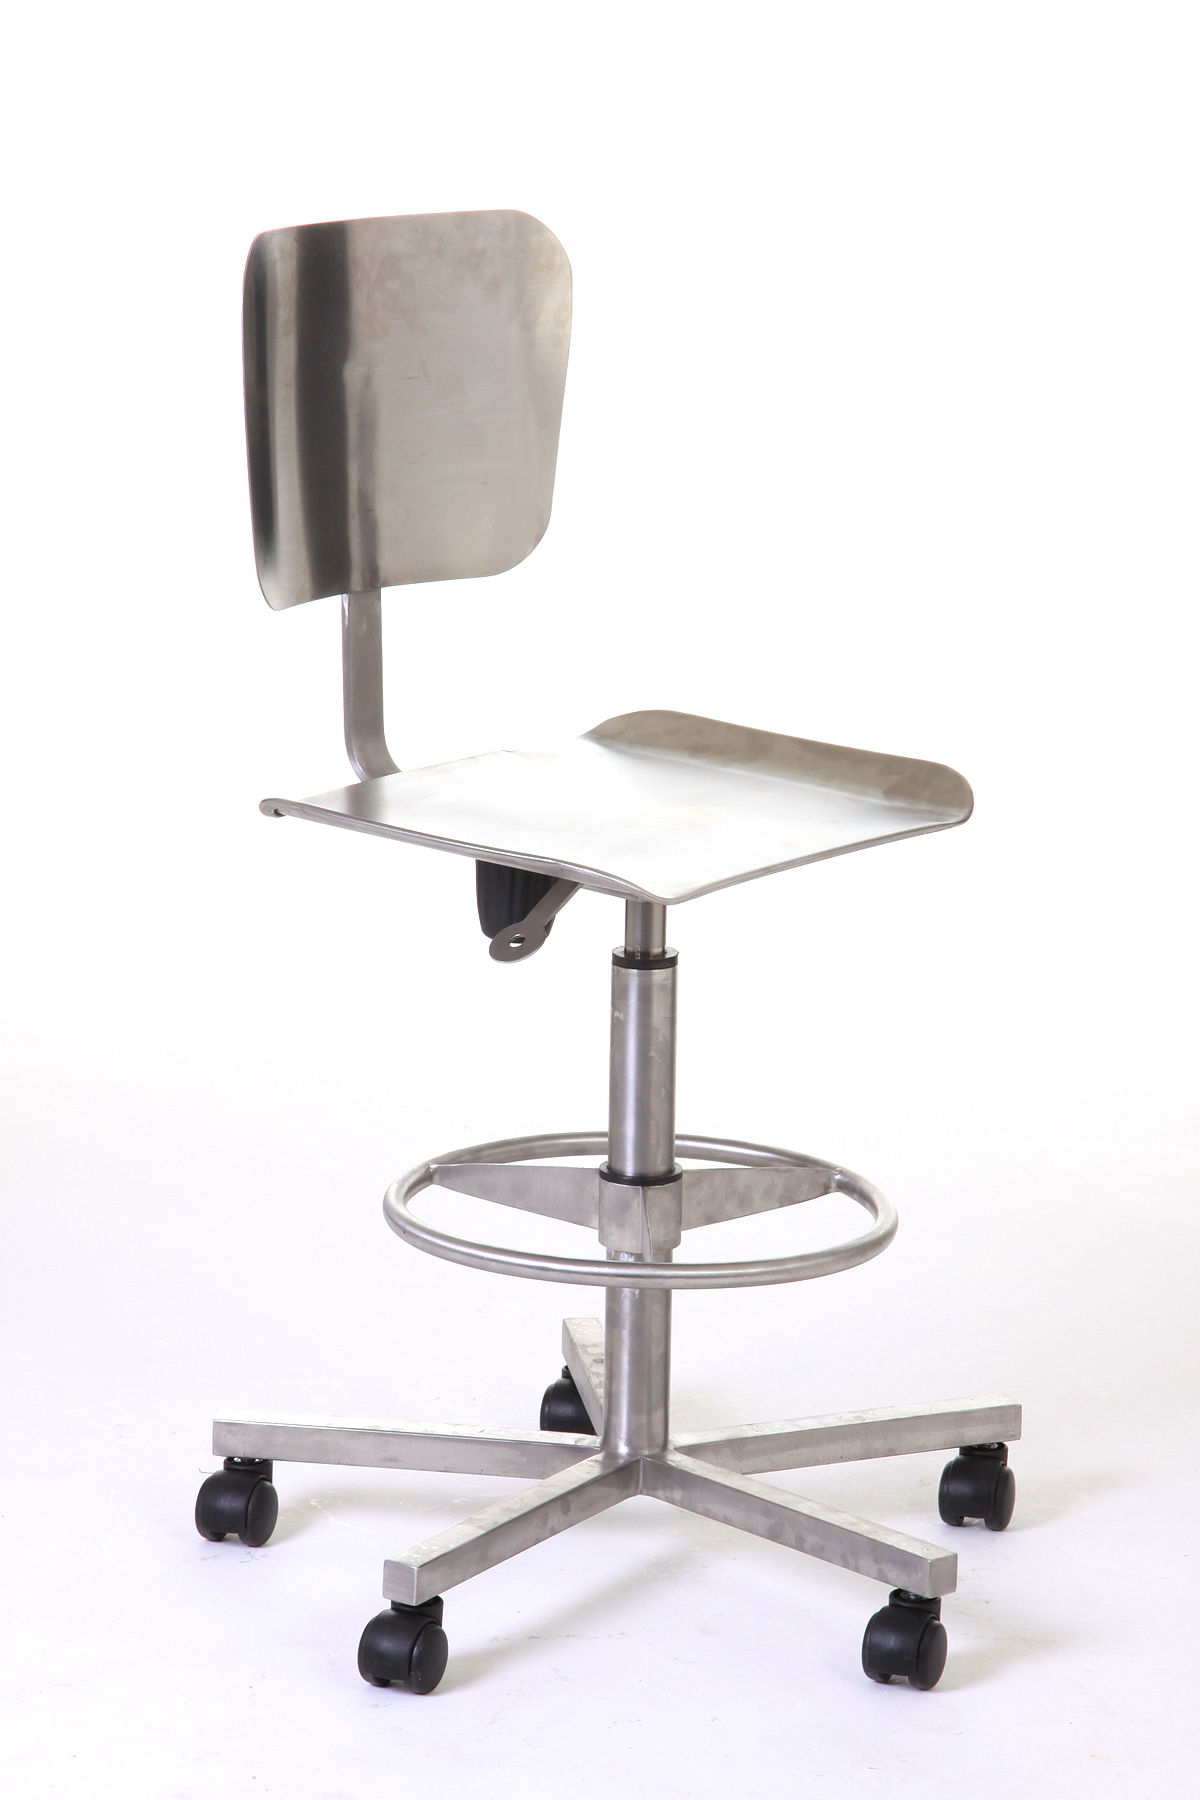 Filestainless Steel Laboratory Pneumatic Chair With Wheelsjpg Wikimedia Commons